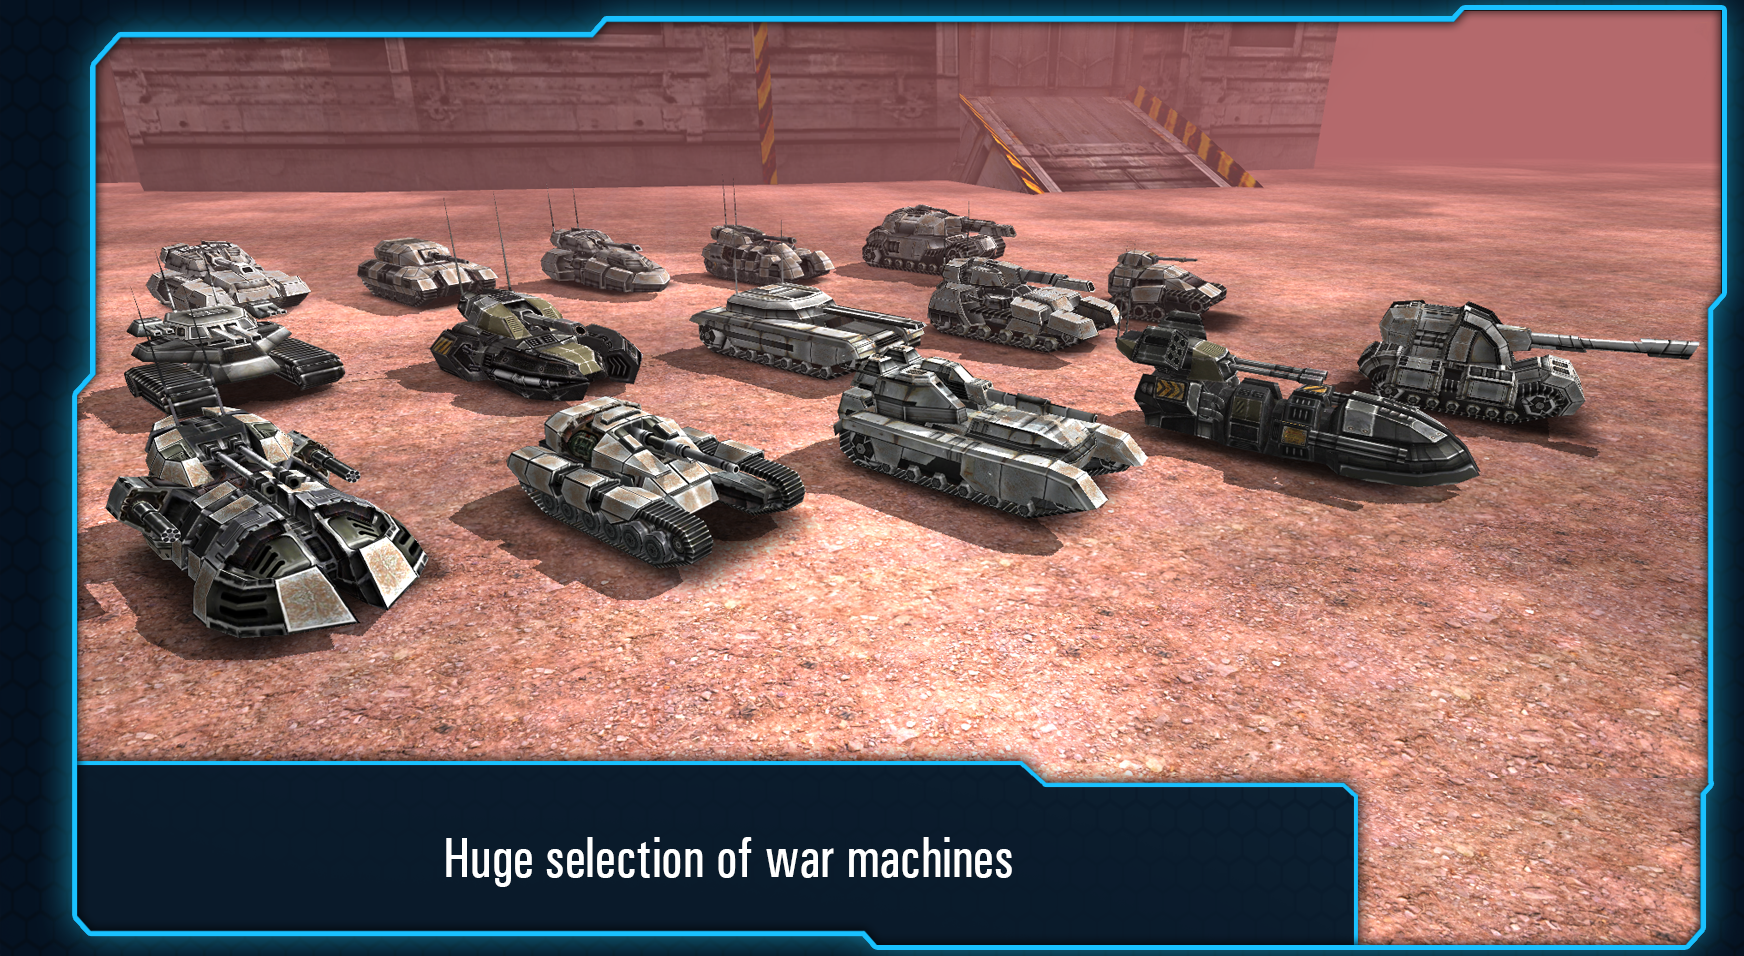 Iron Tanks: Tank War Game download the last version for mac